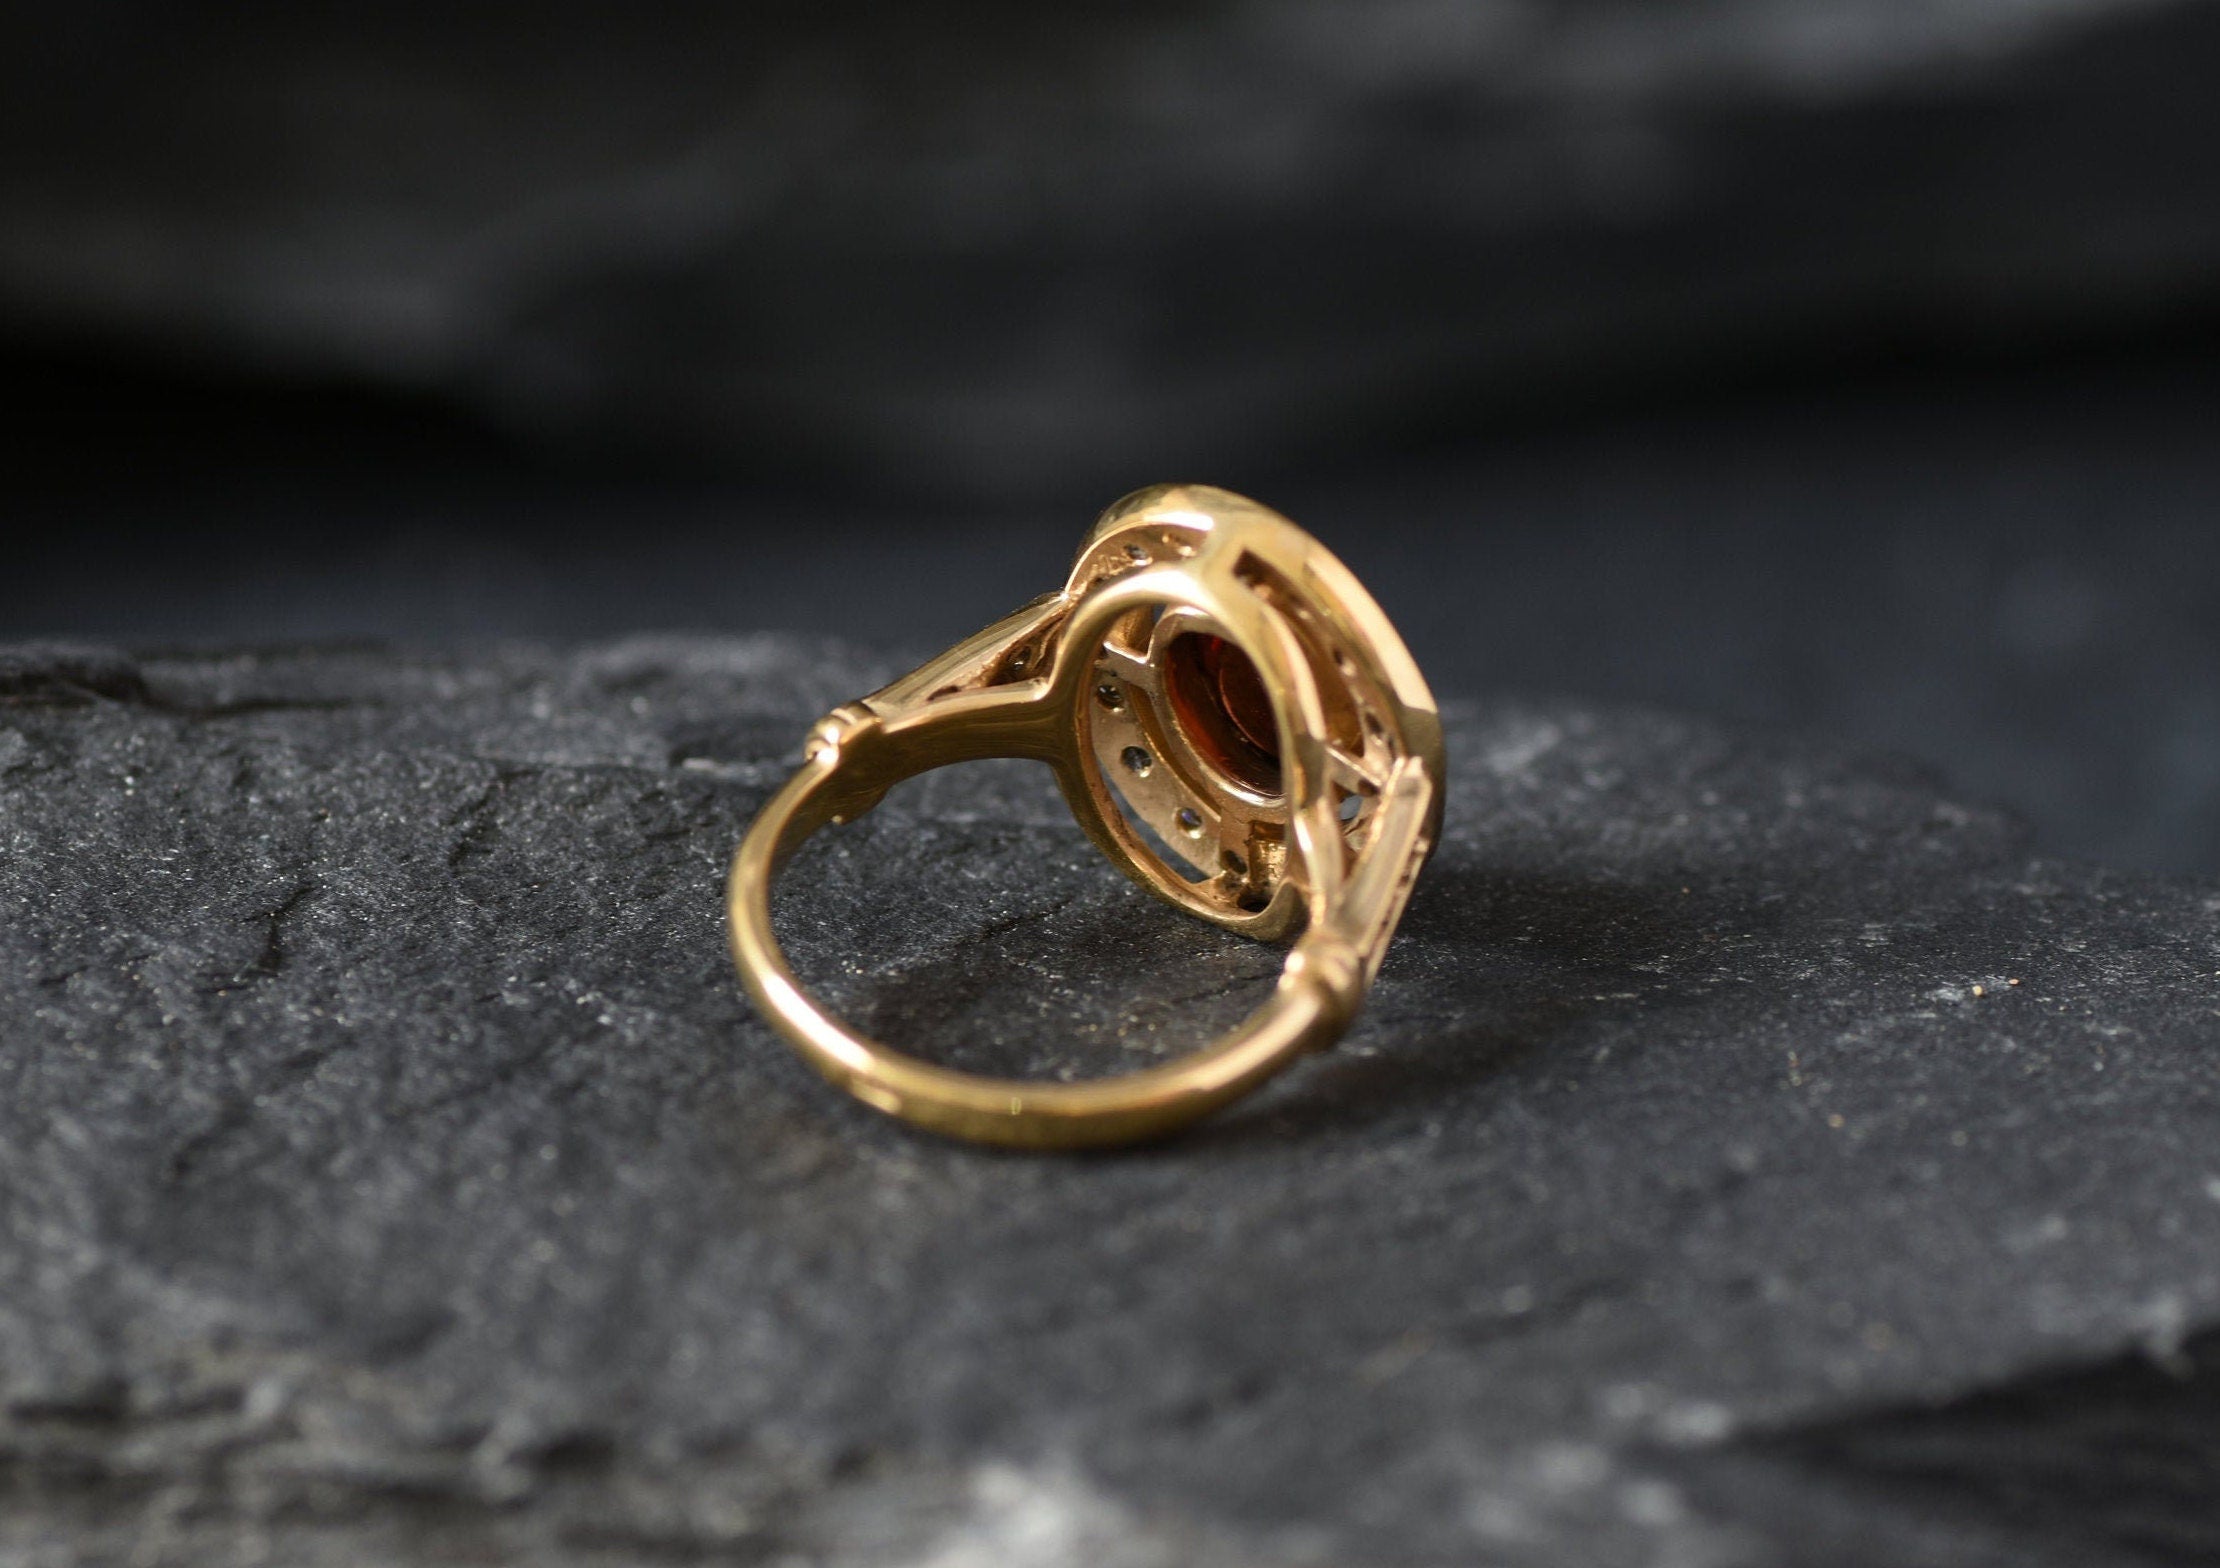 Gold Garnet Ring, Natural Garnet, Antique Ring, Red Garnet Ring, Red Vintage Ring, Gold Filled Ring, Statement Oval Ring, Gold Vermeil Ring